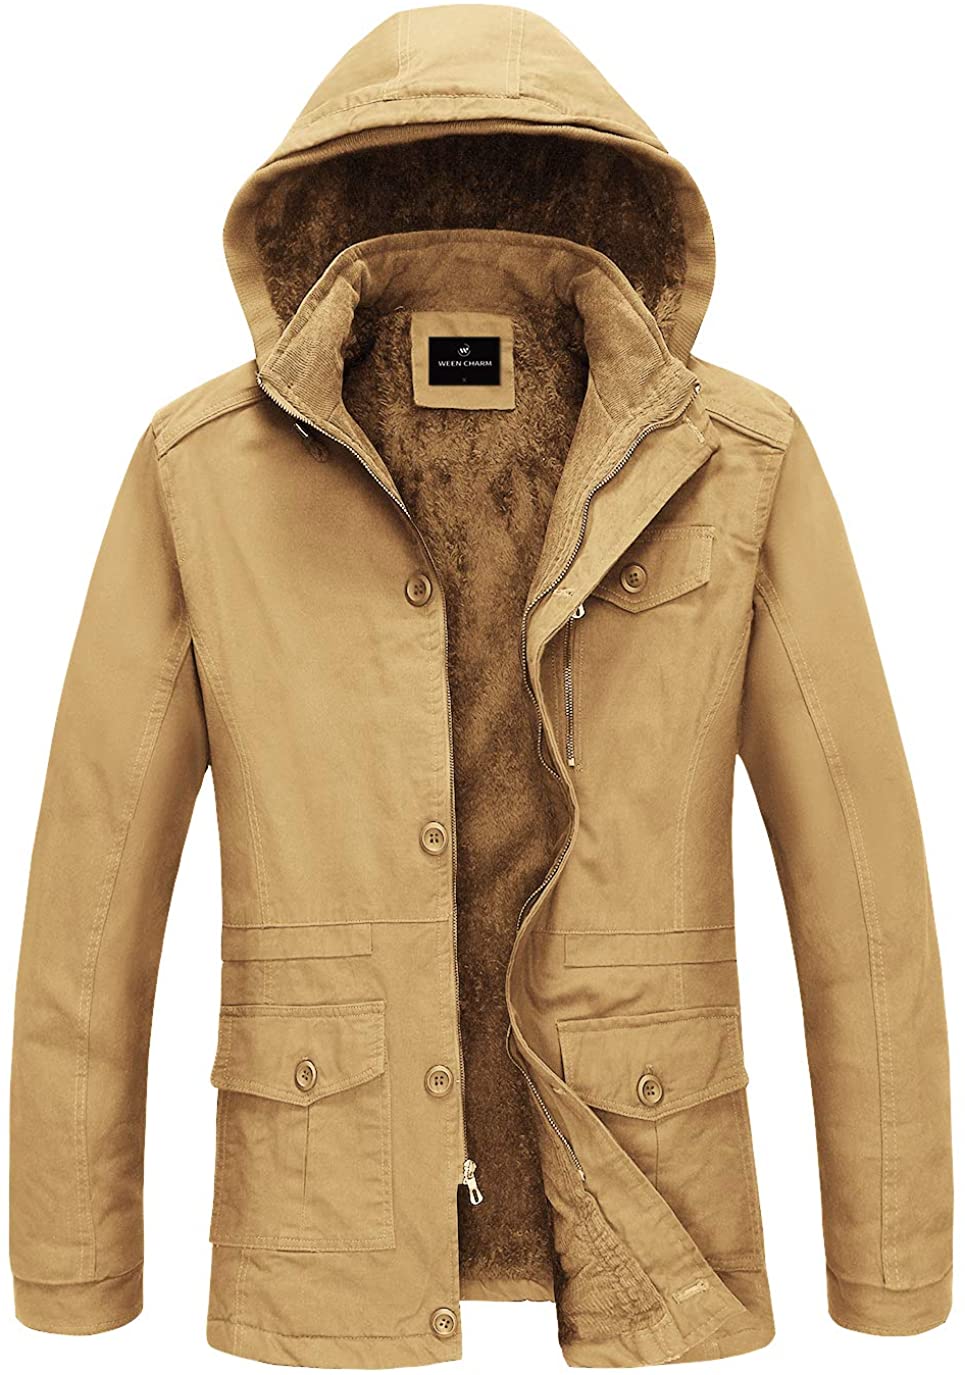 Dtydtpe Winter Jackets for Men, Men's Autumn&Winter Solid Color